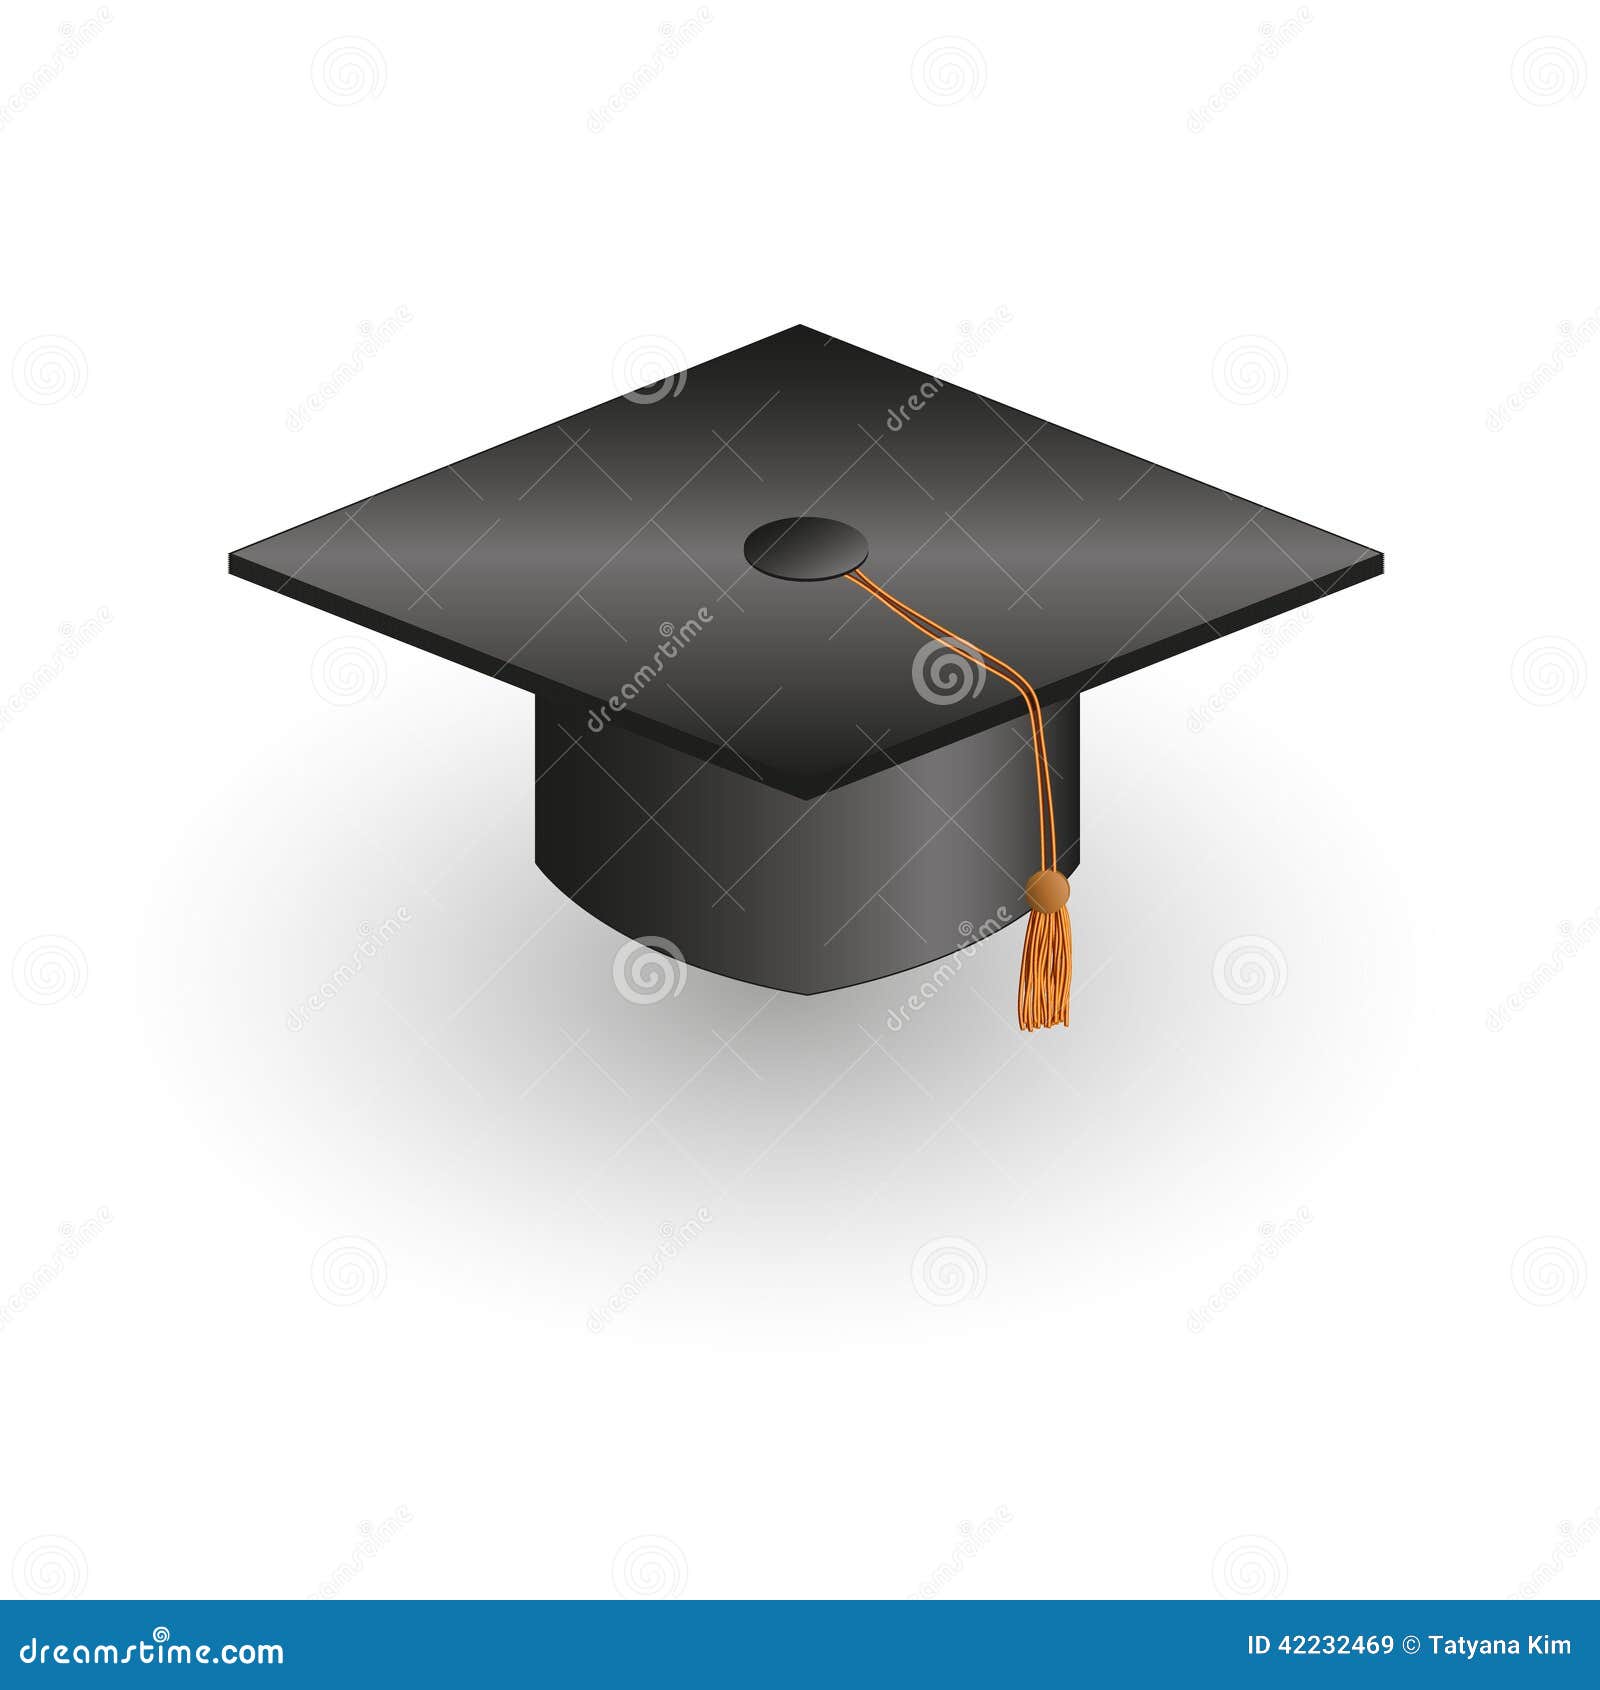 Square academic cap stock vector. Illustration of icon - 42232469